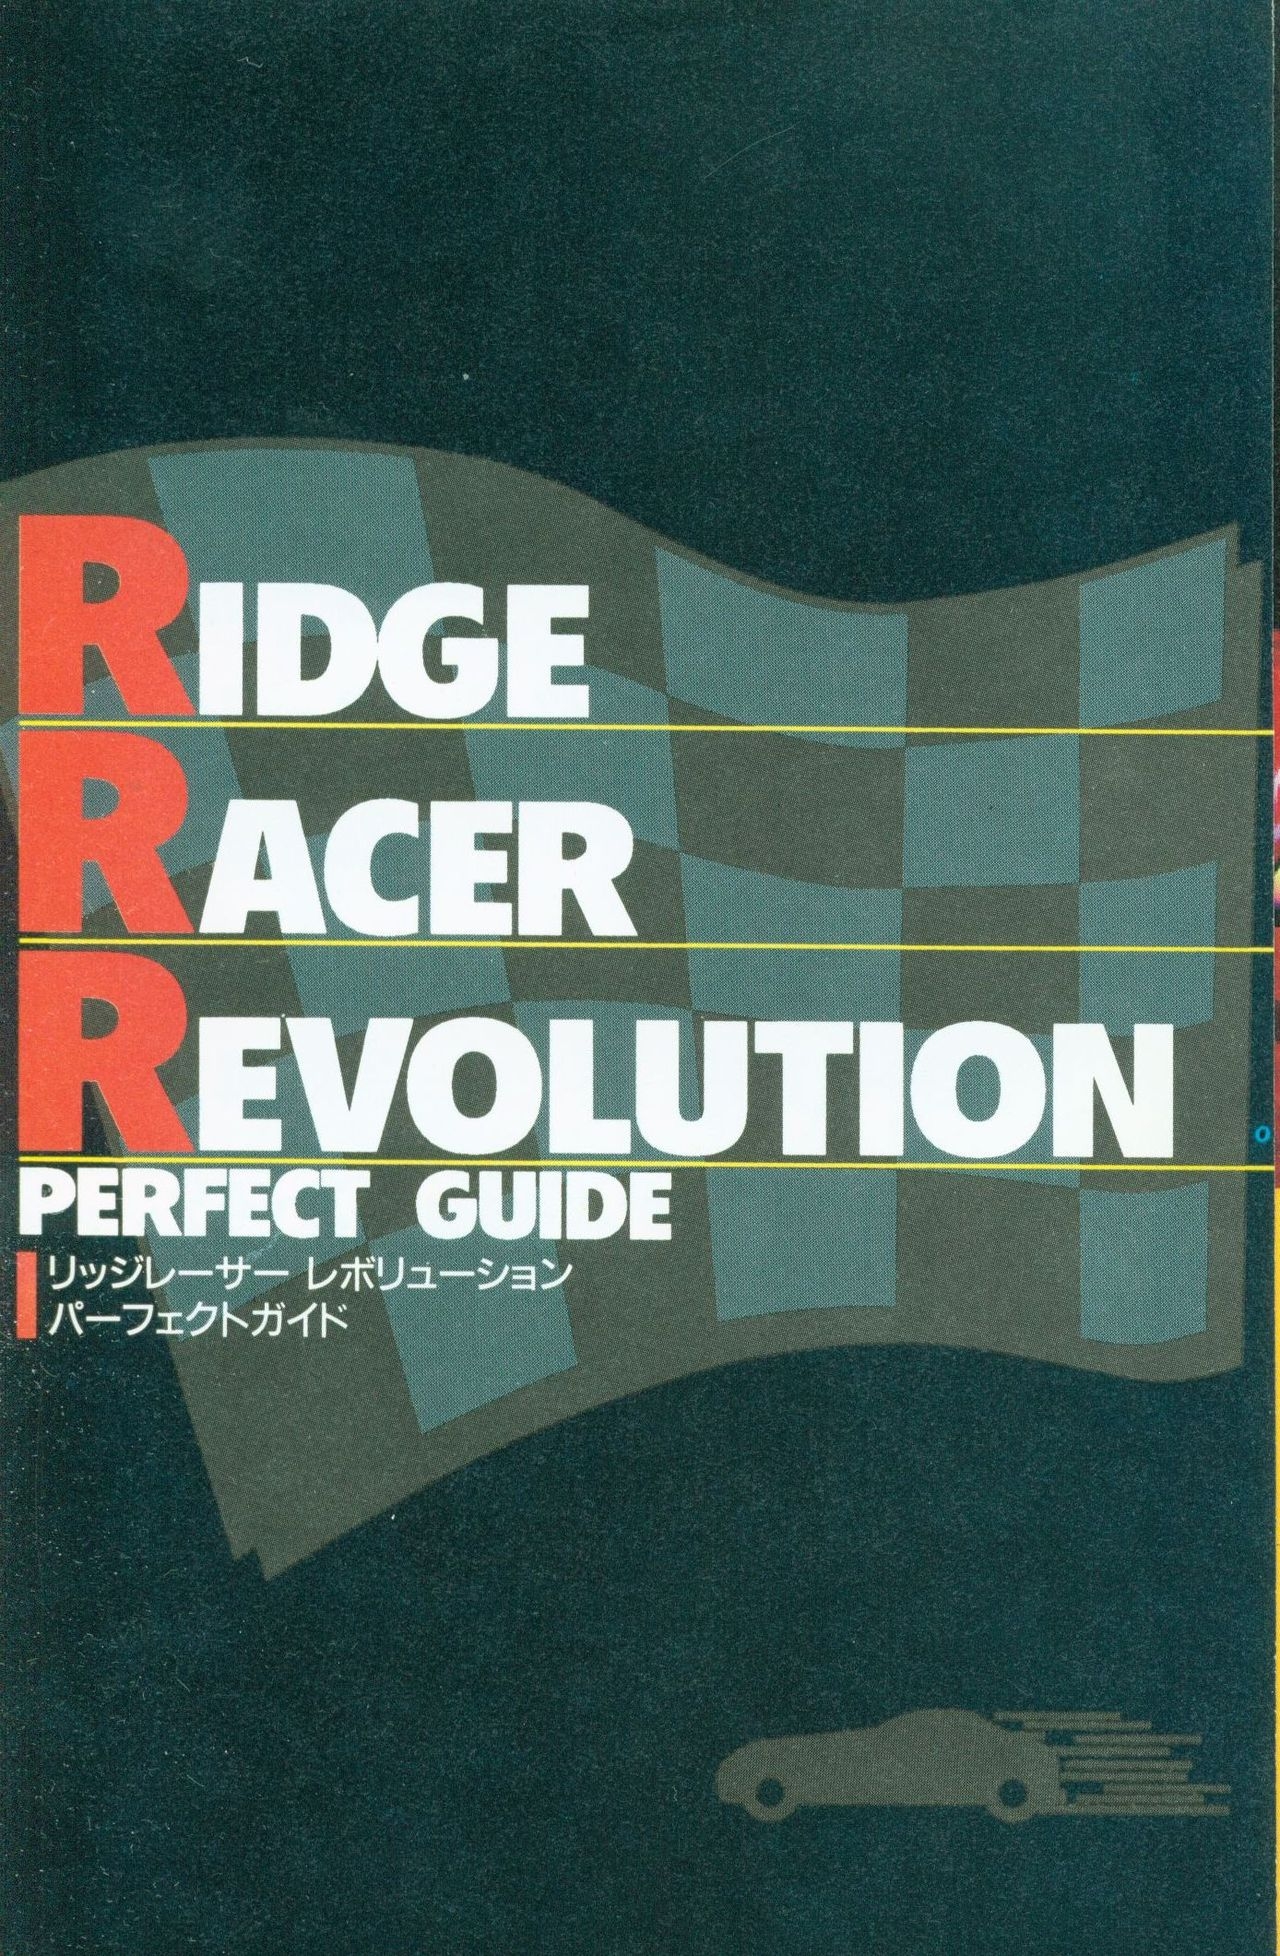 Ridge Racer Revolution Perfect Guide 2